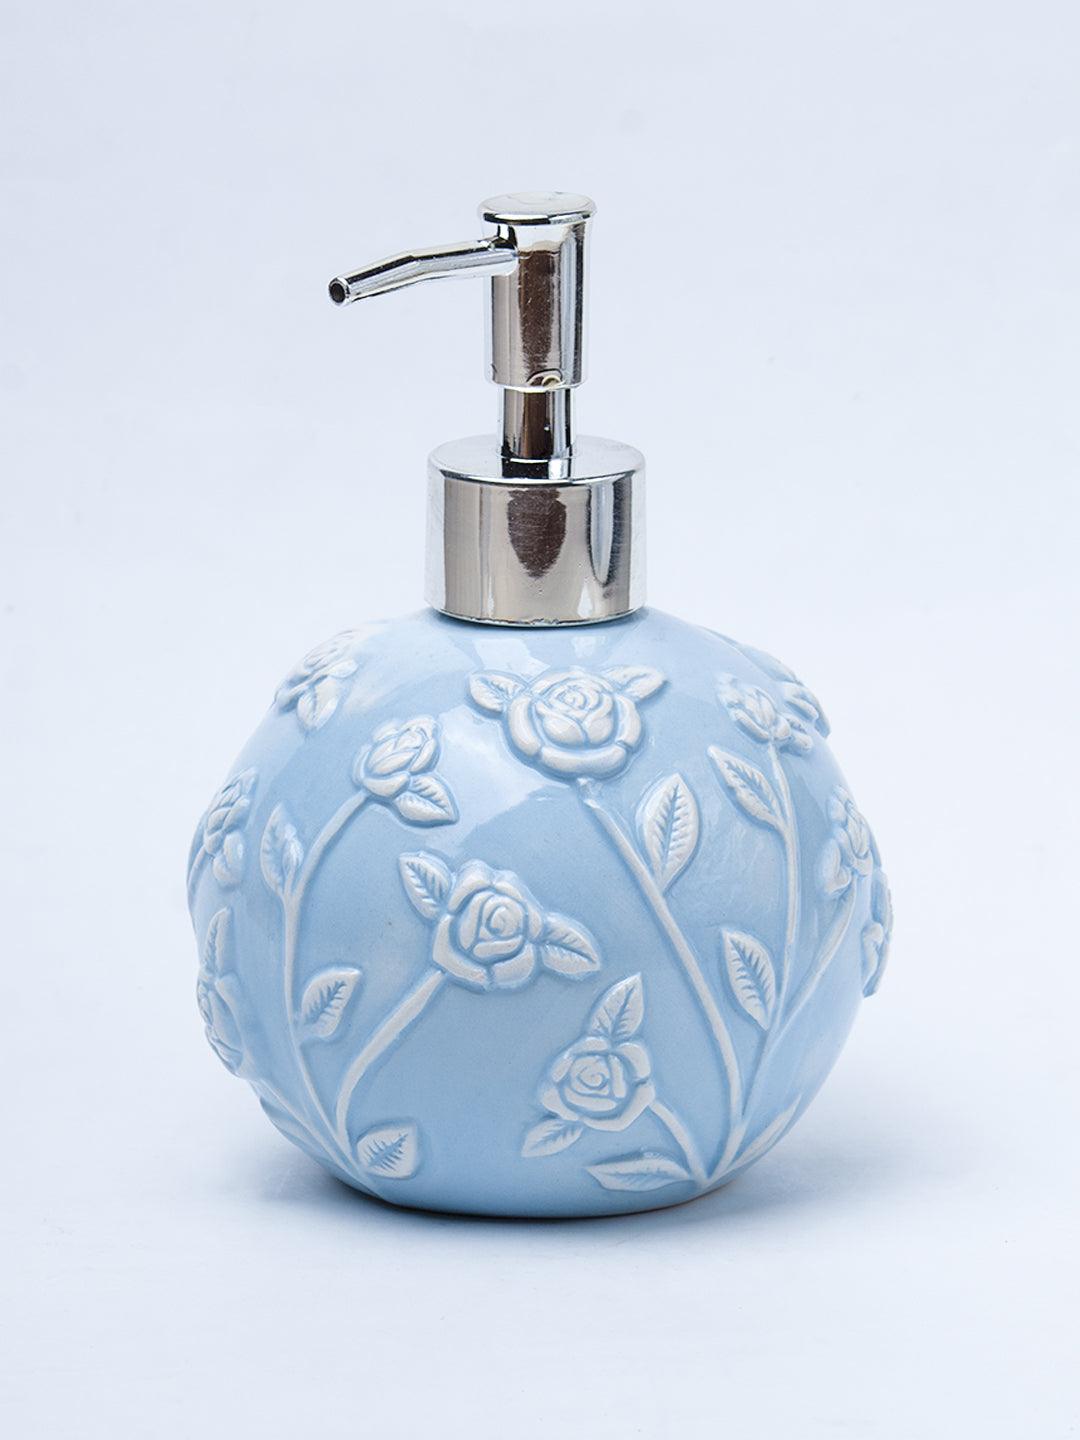 Blue Ceramic Bathroom Set Of 4 - Floral Design, Bath Accessories - 2